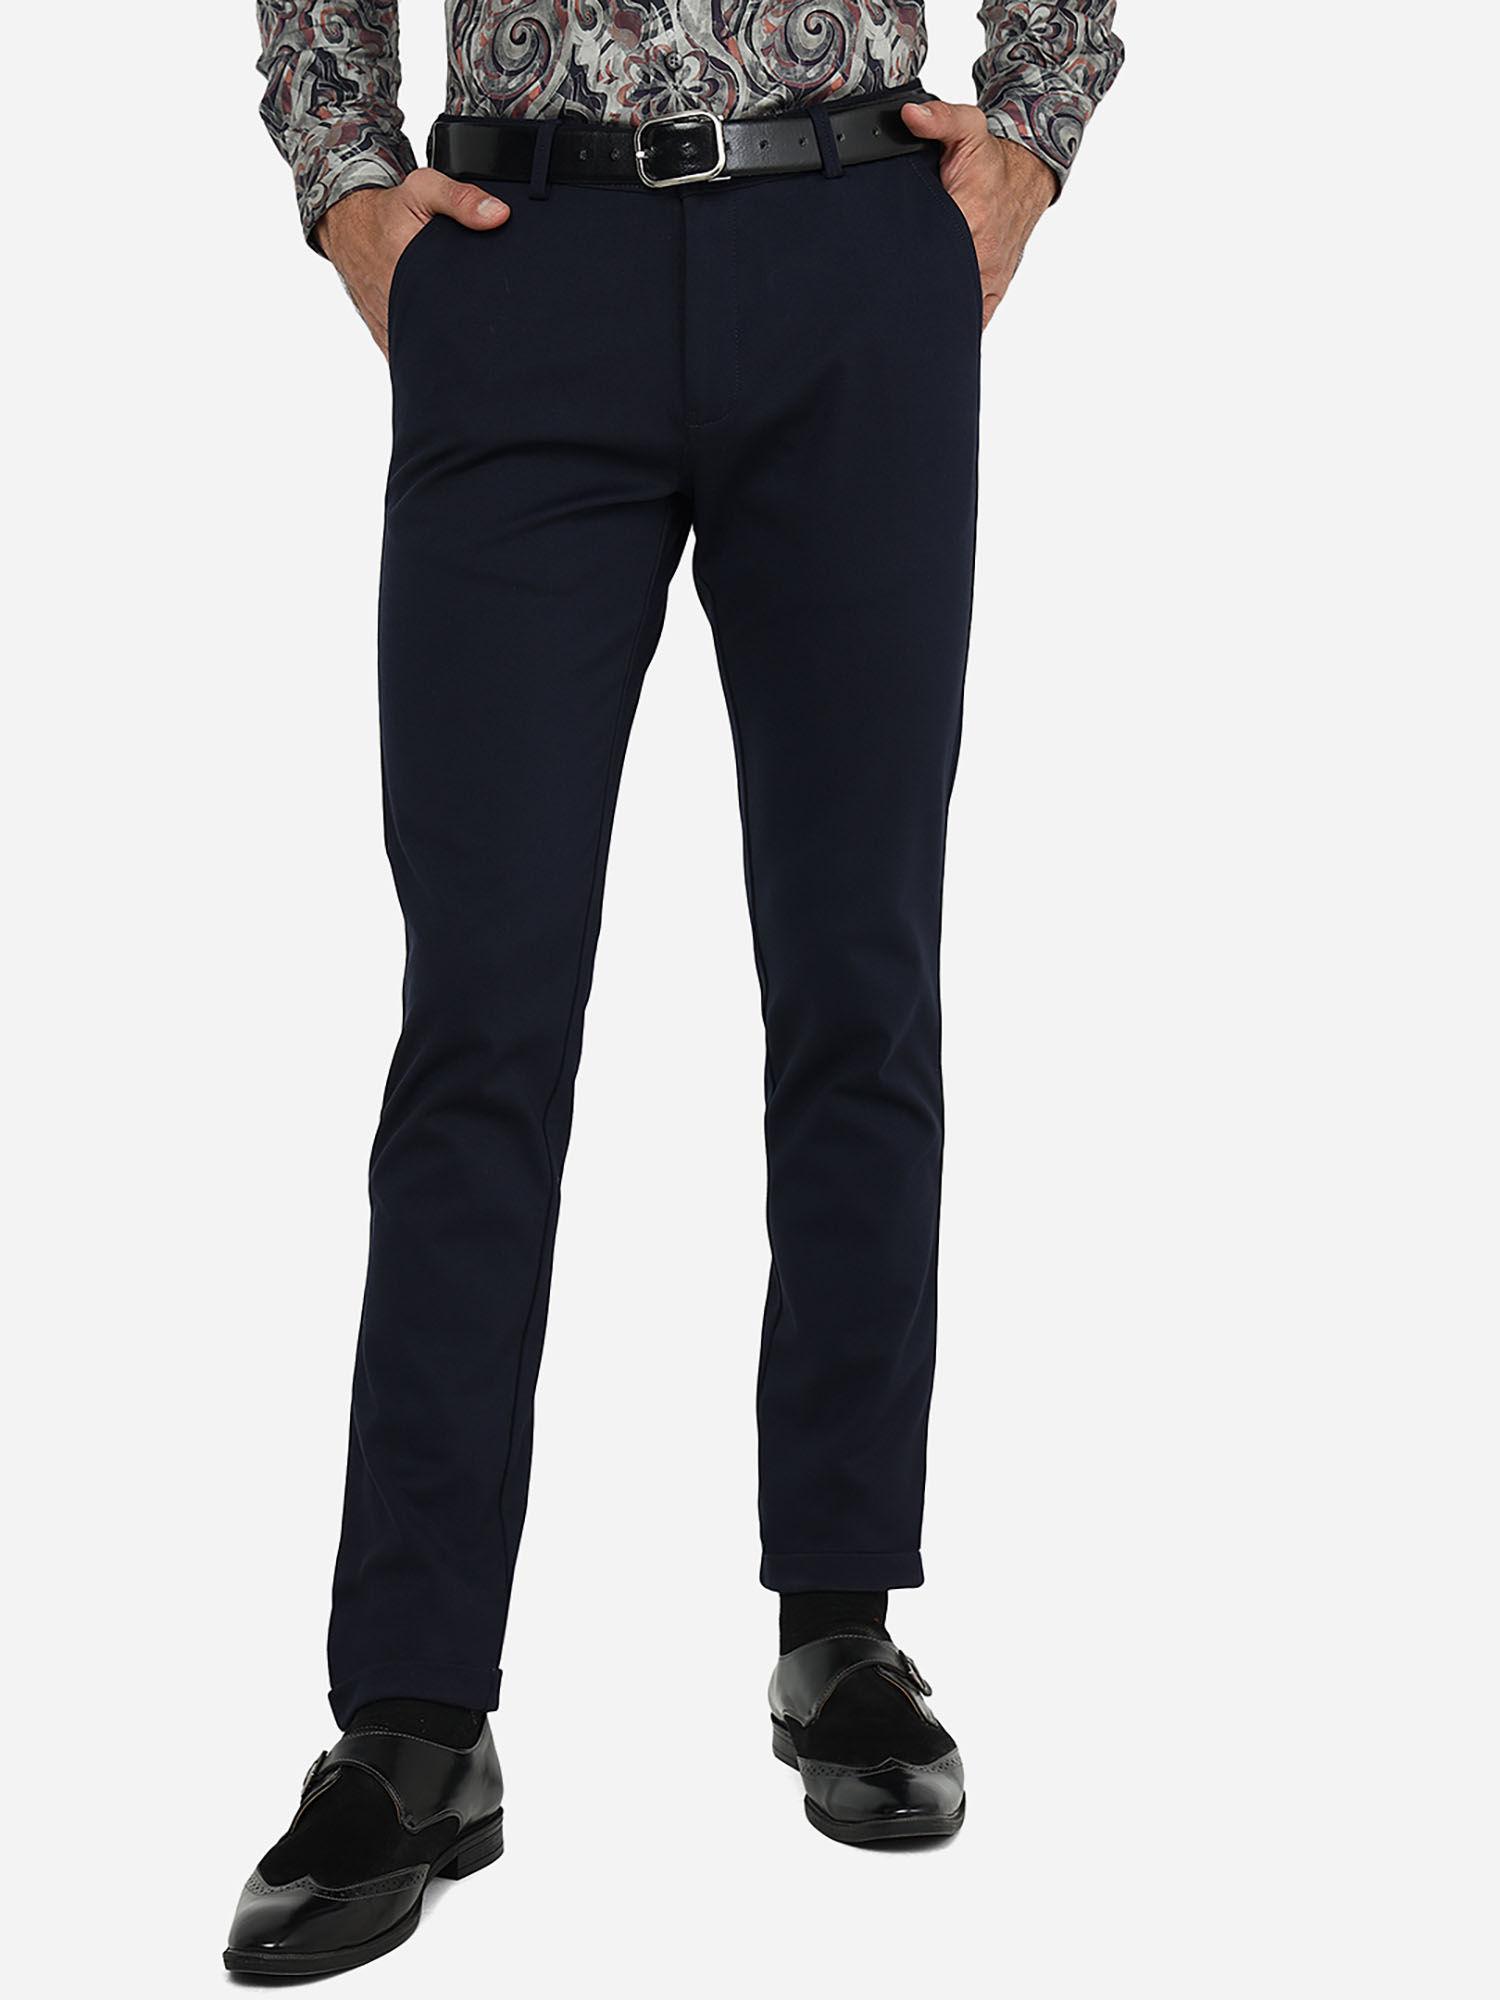 navy blue cotton blend trouser